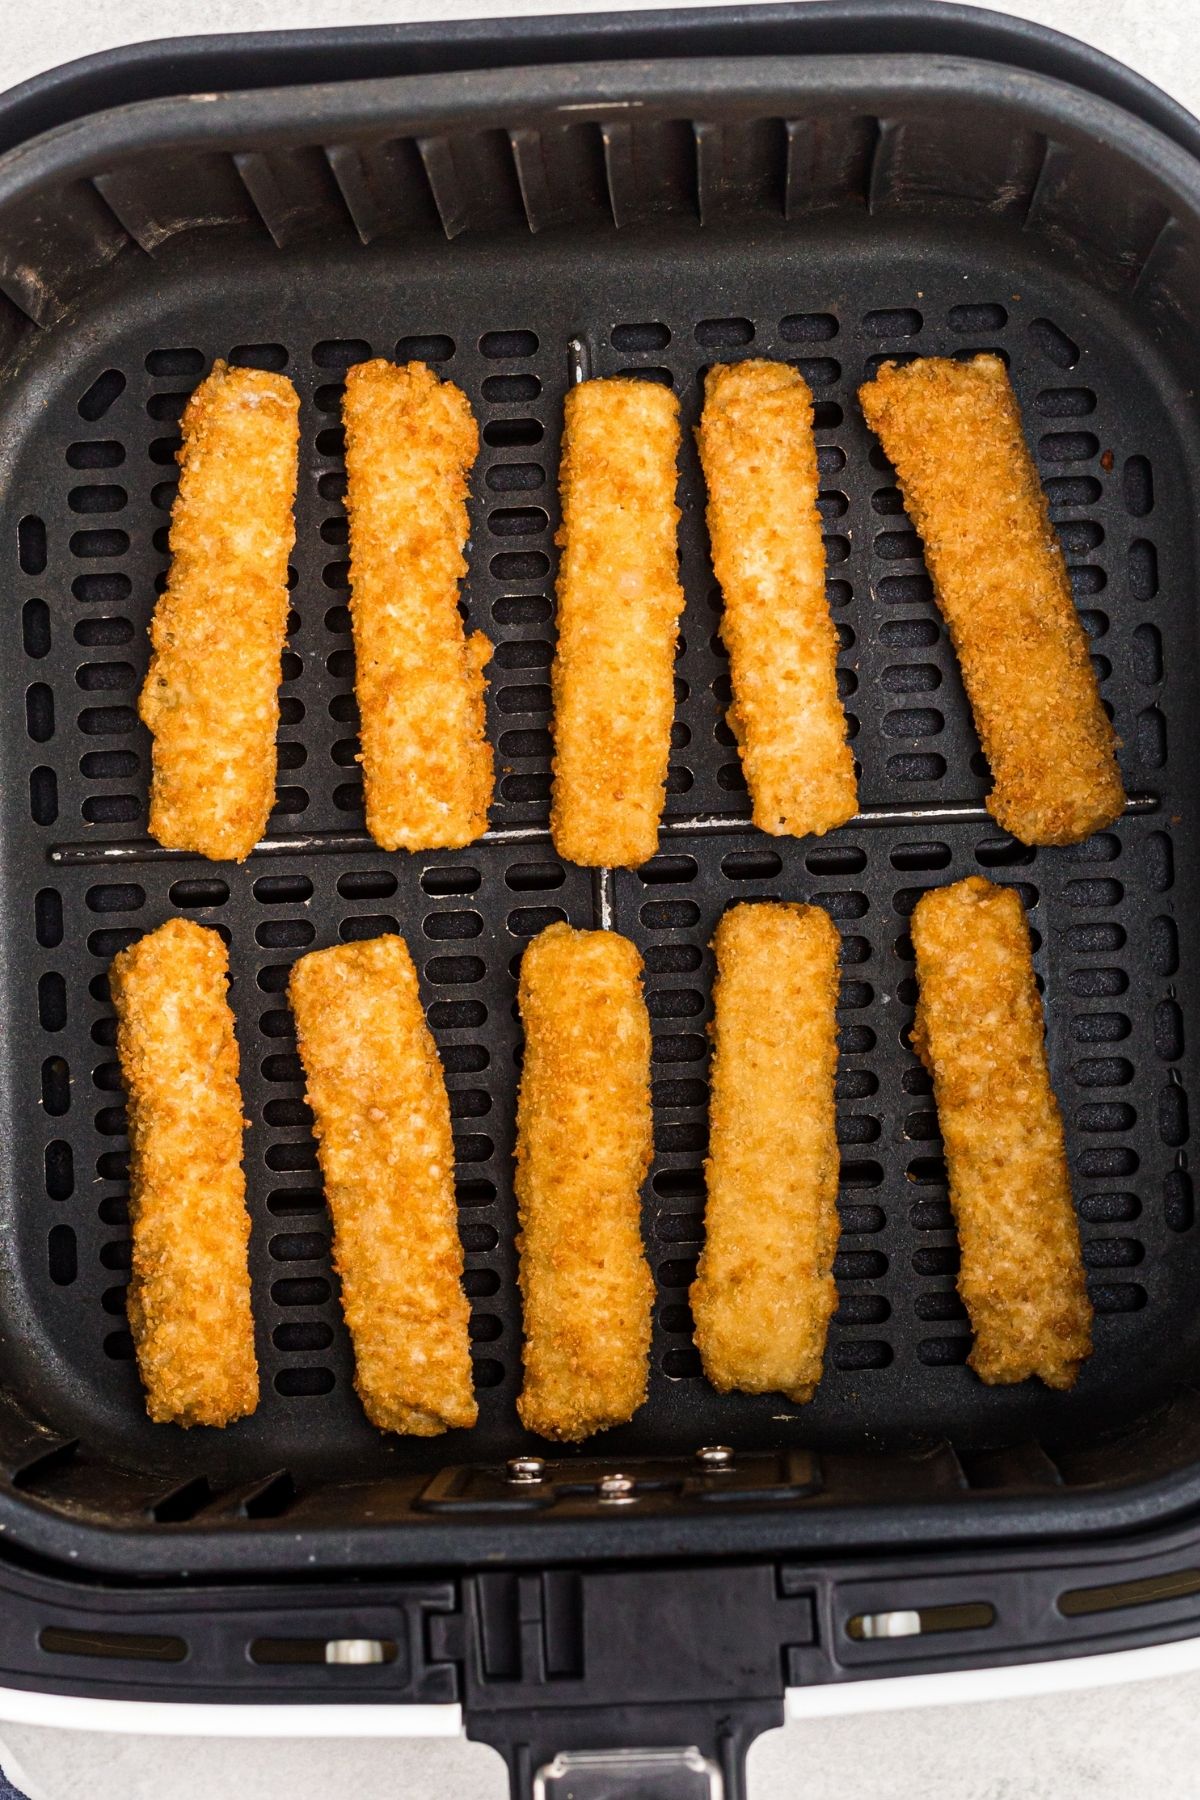 Golden fish sticks before being fried in an air fryer basket